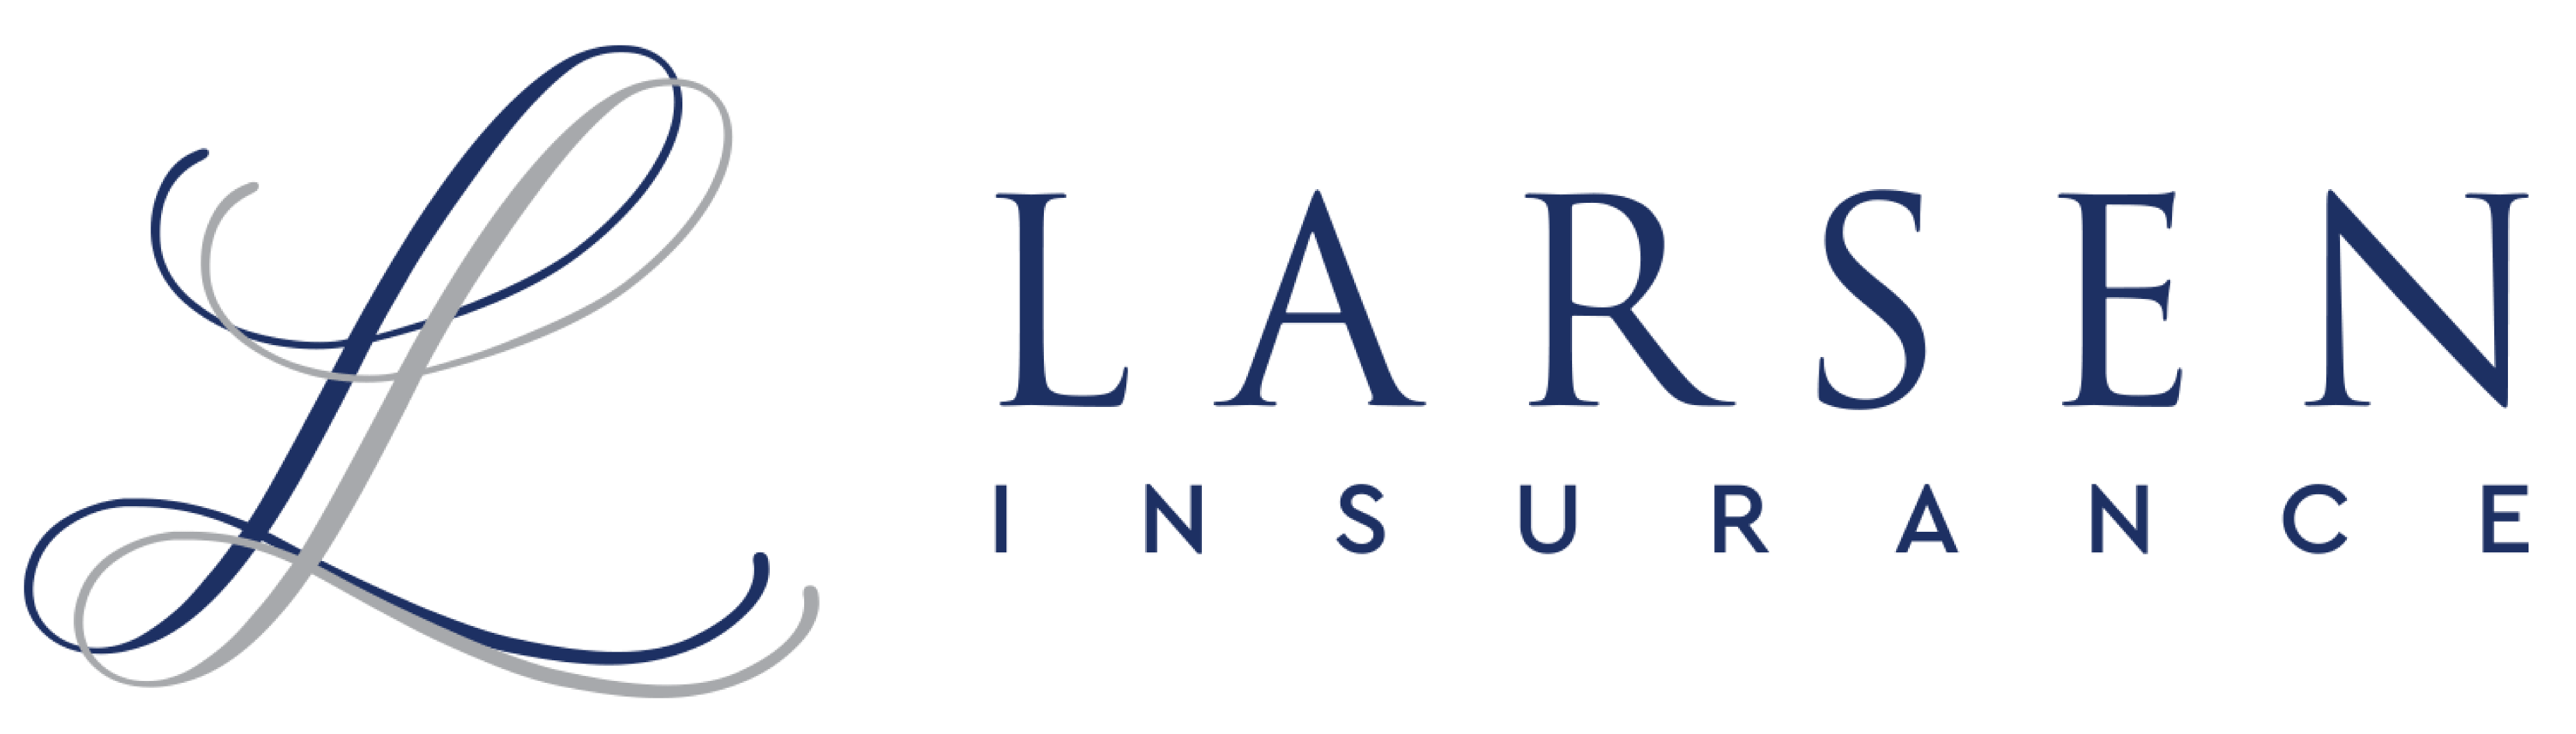 Cindy Larsen Insurance